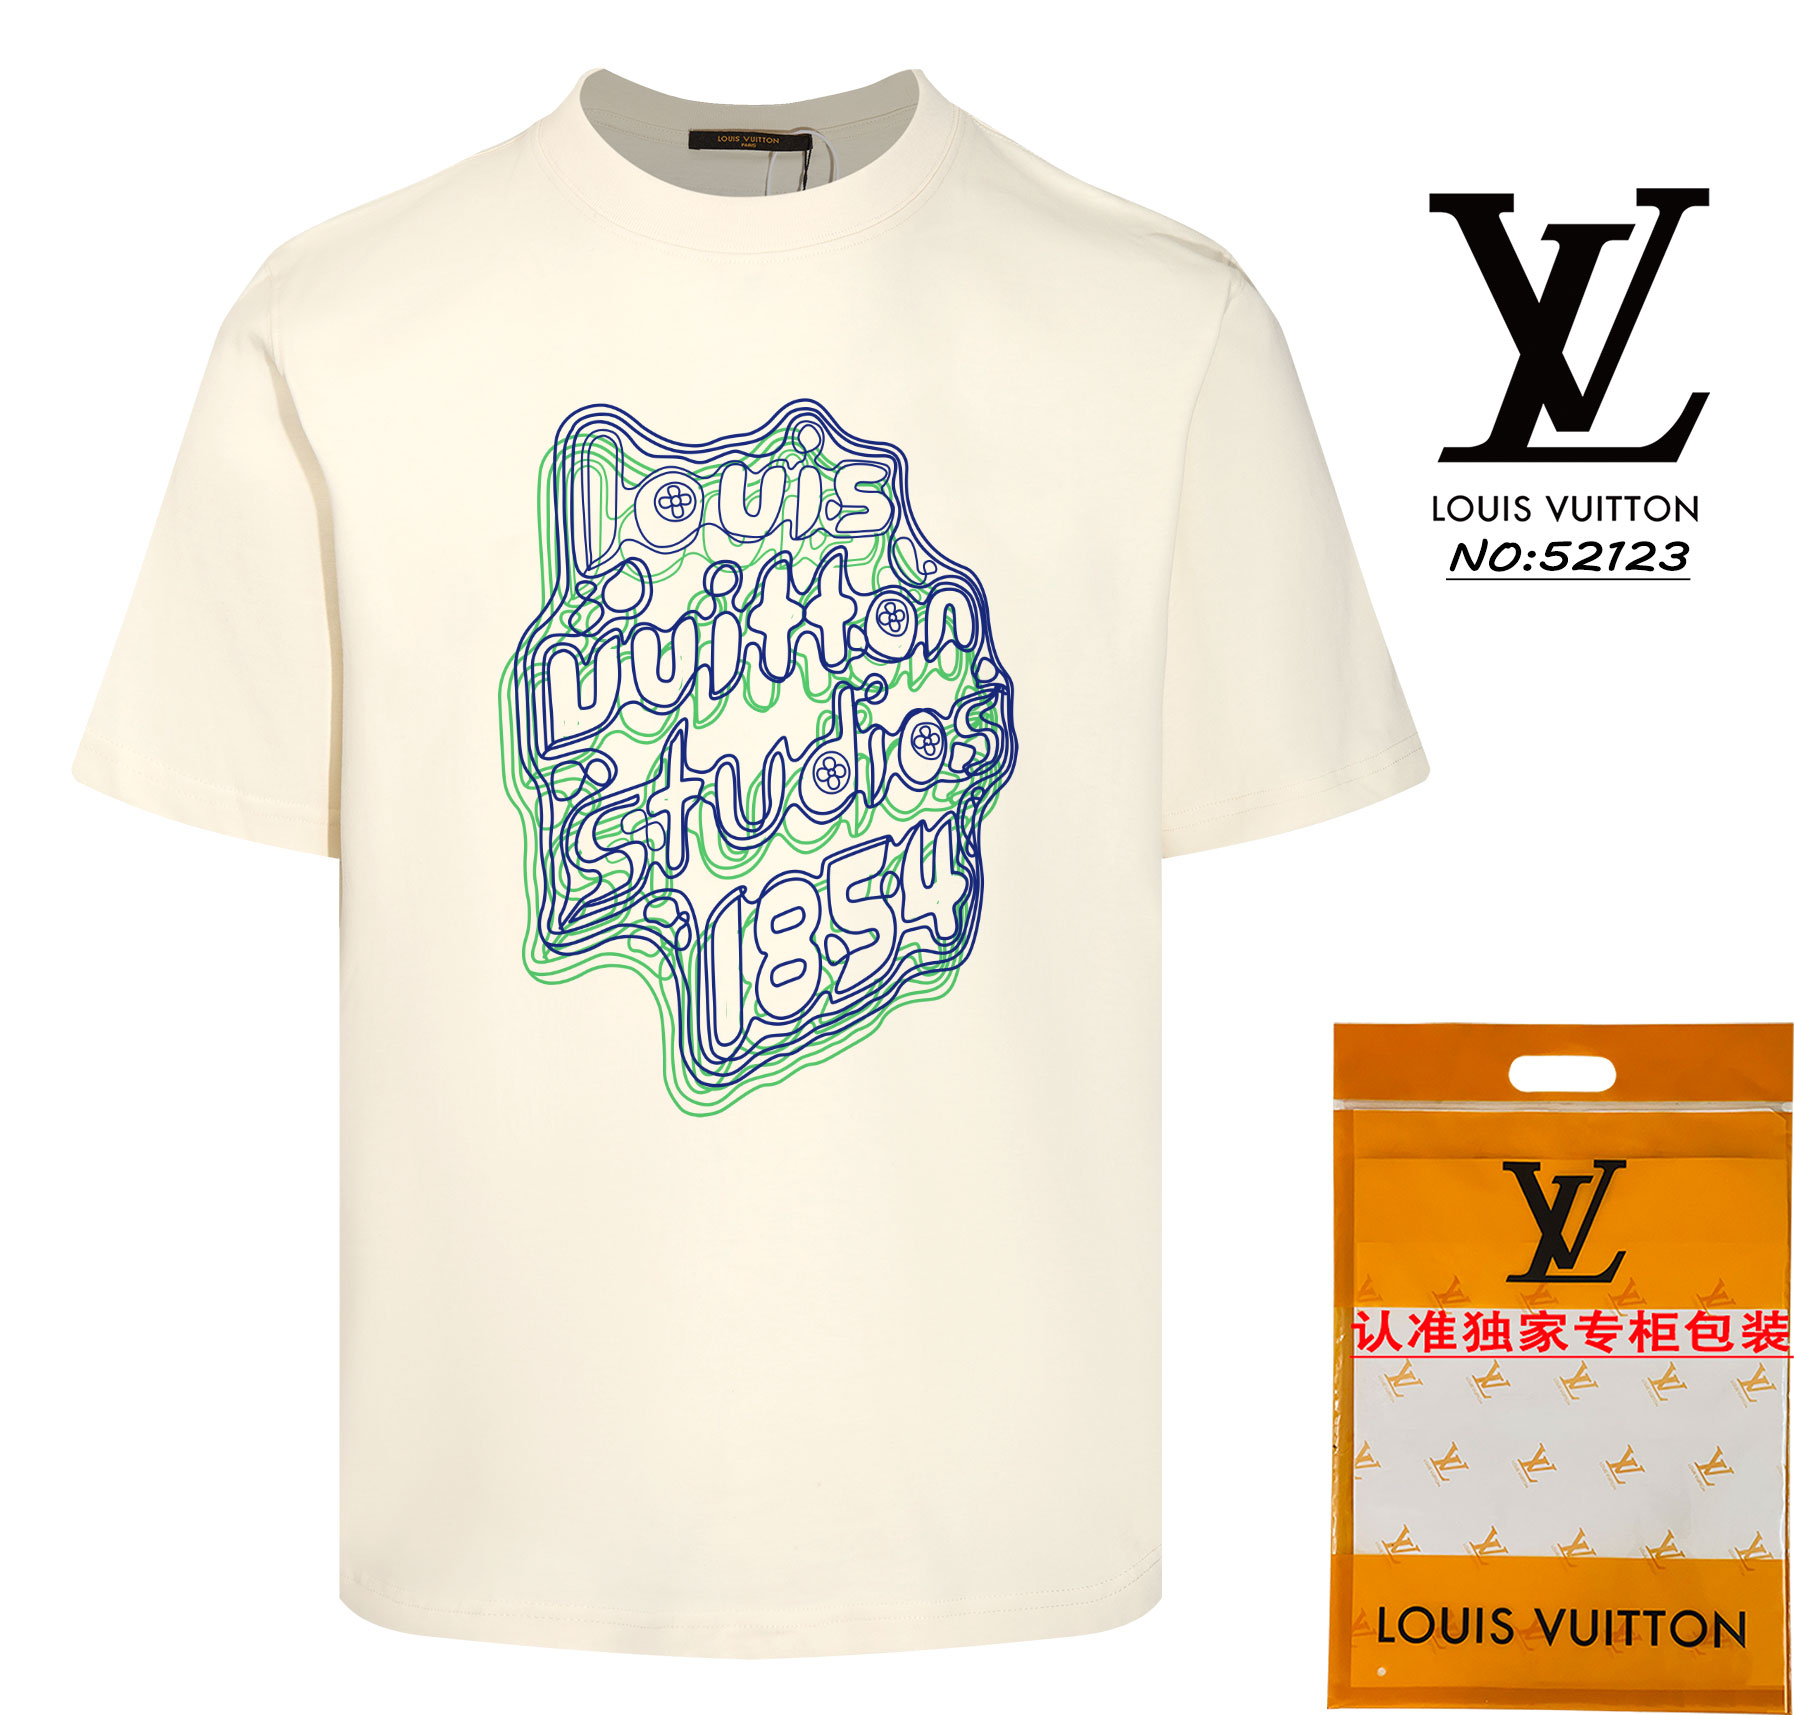 7 Star Collection
 Louis Vuitton Clothing T-Shirt Apricot Color Black White Unisex Short Sleeve